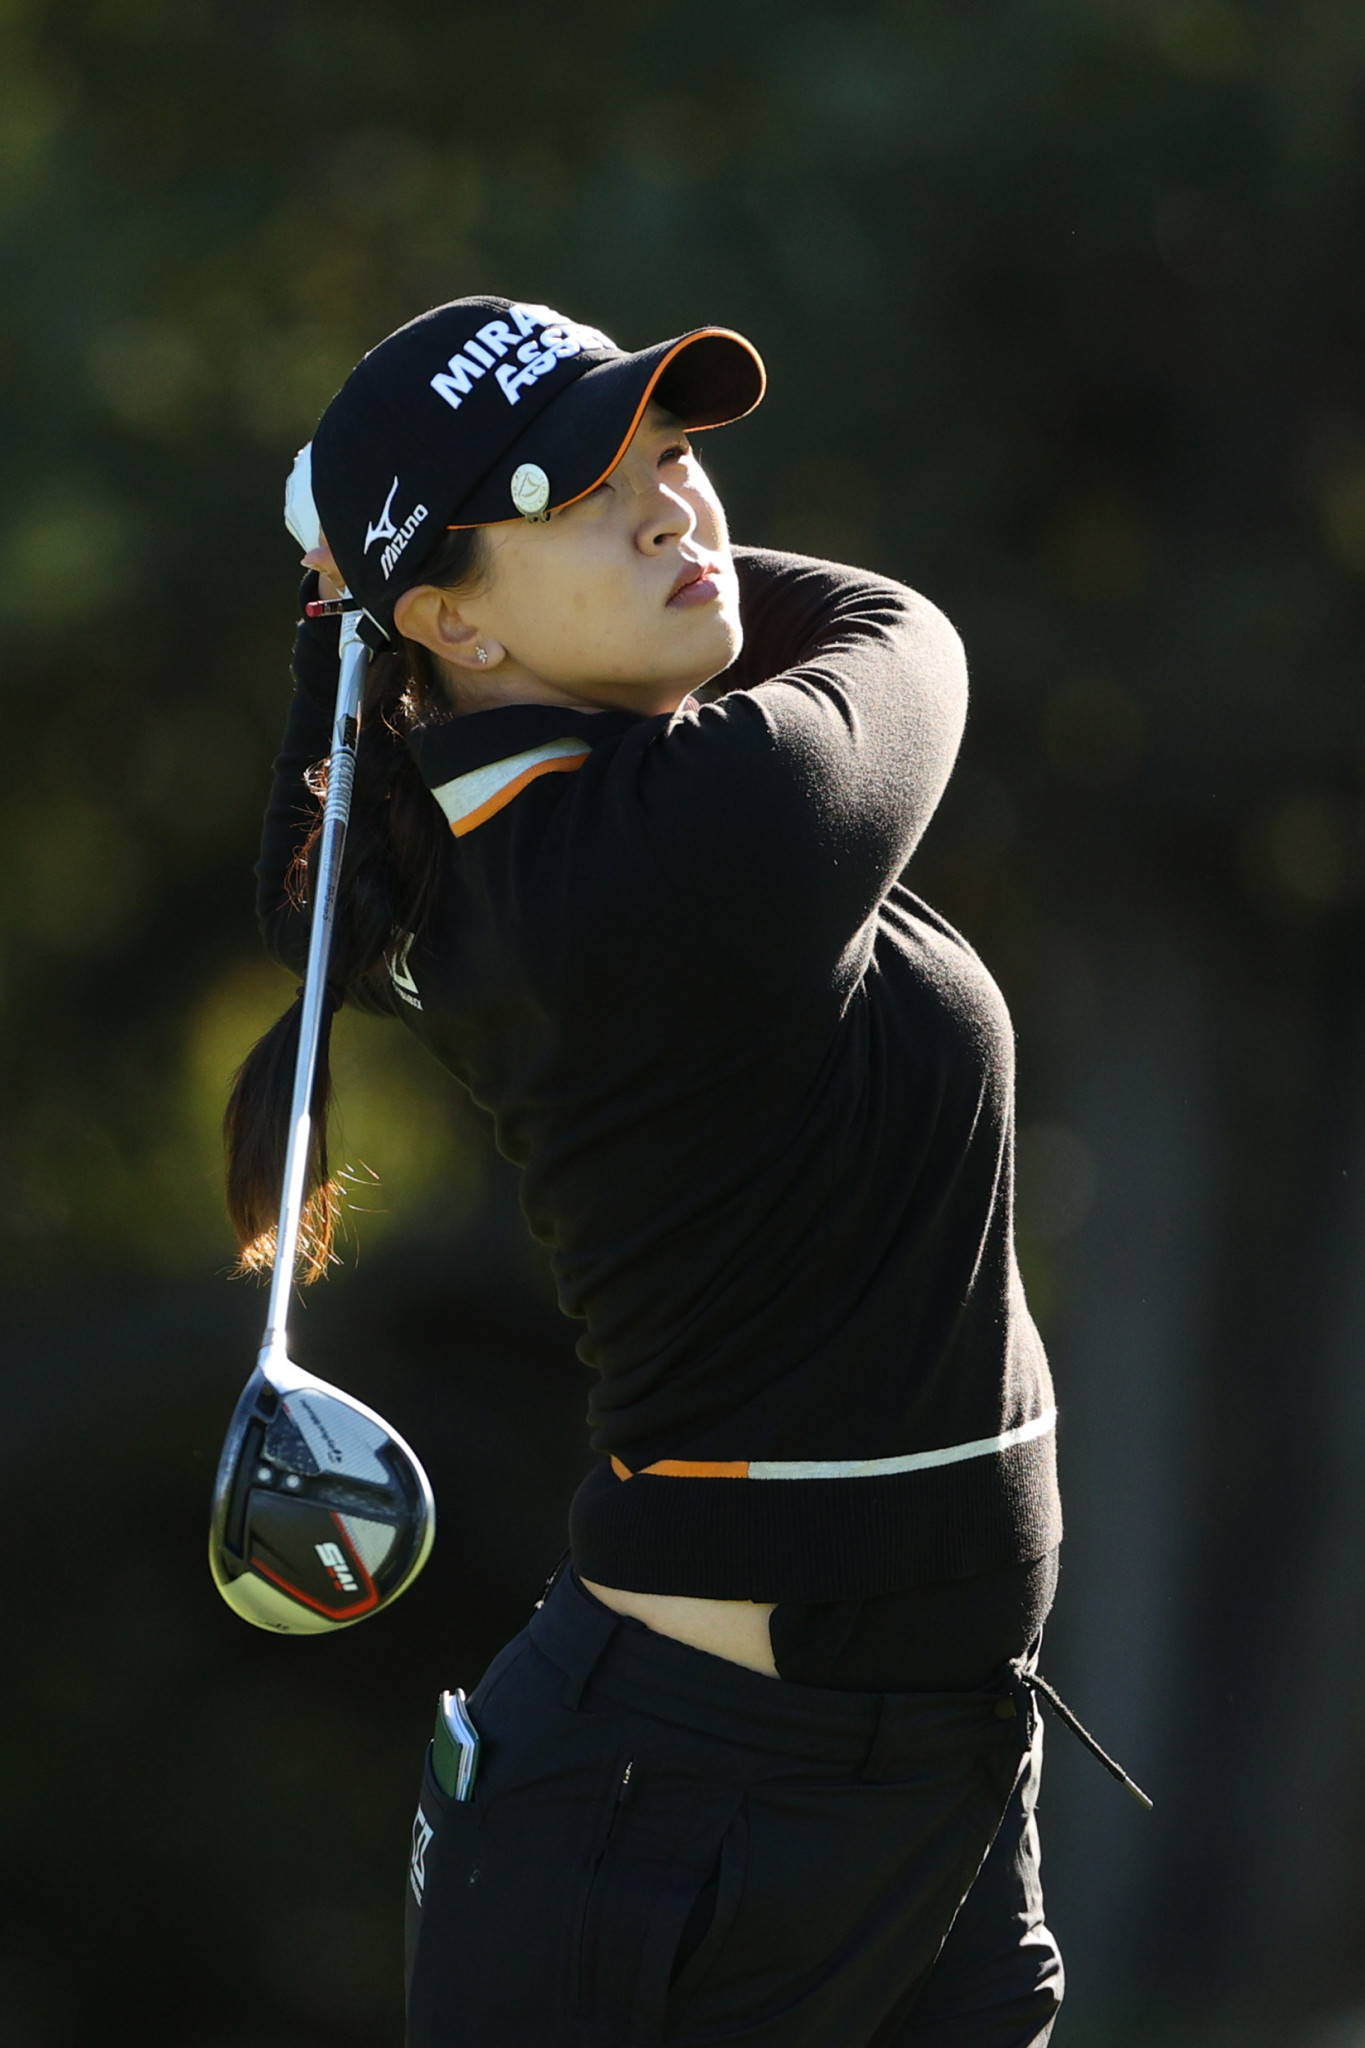 Hot pics kang danielle Golfers Michelle